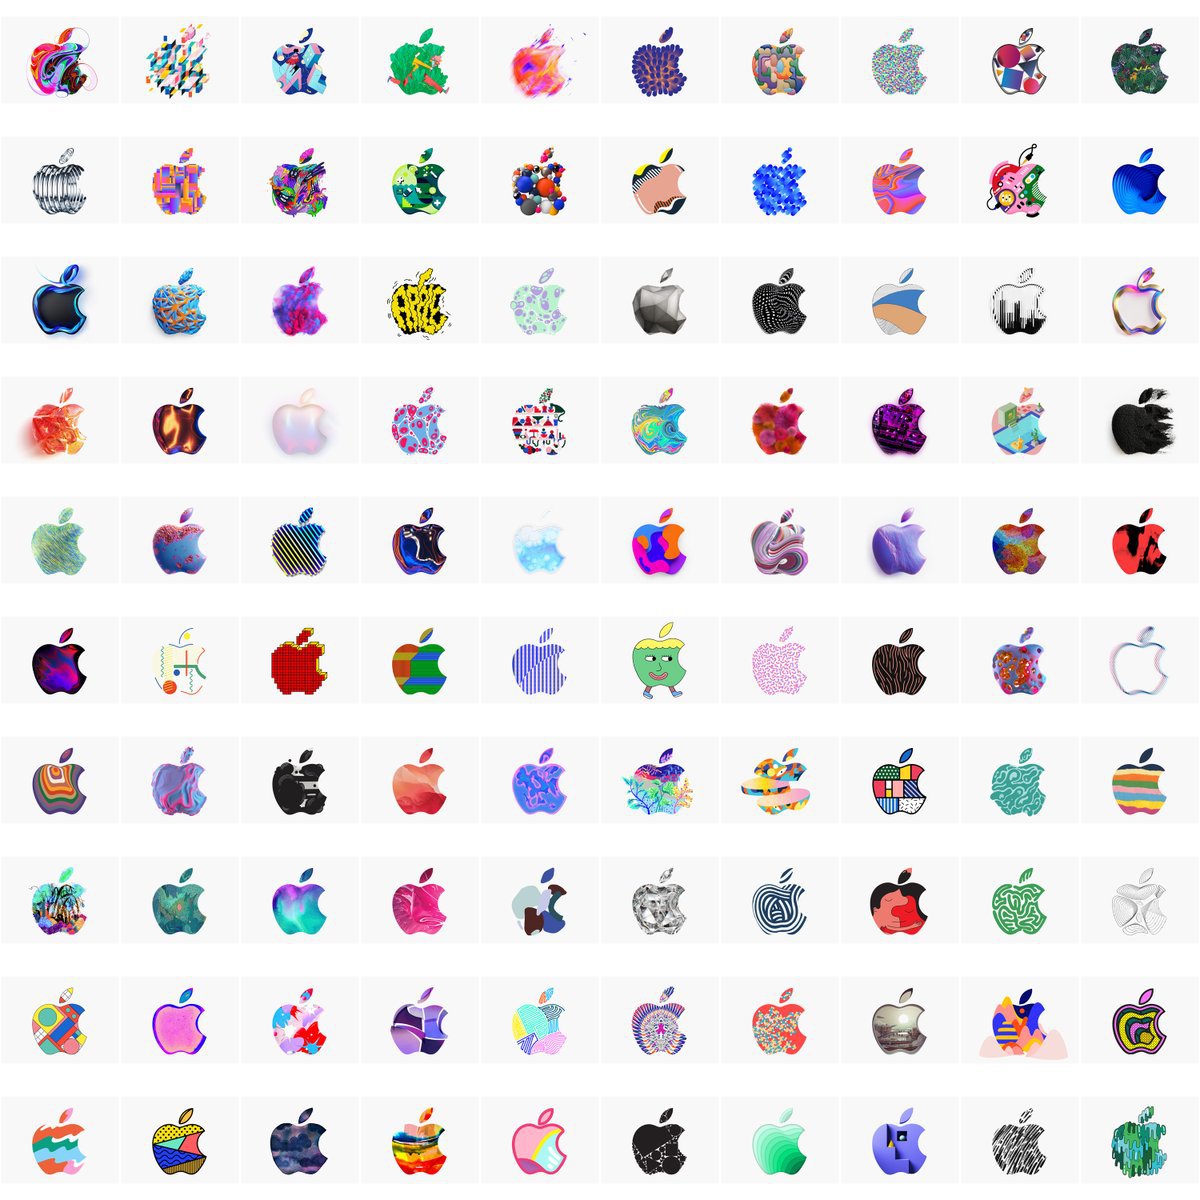 Imagen 001 keynote Apple redisena logos